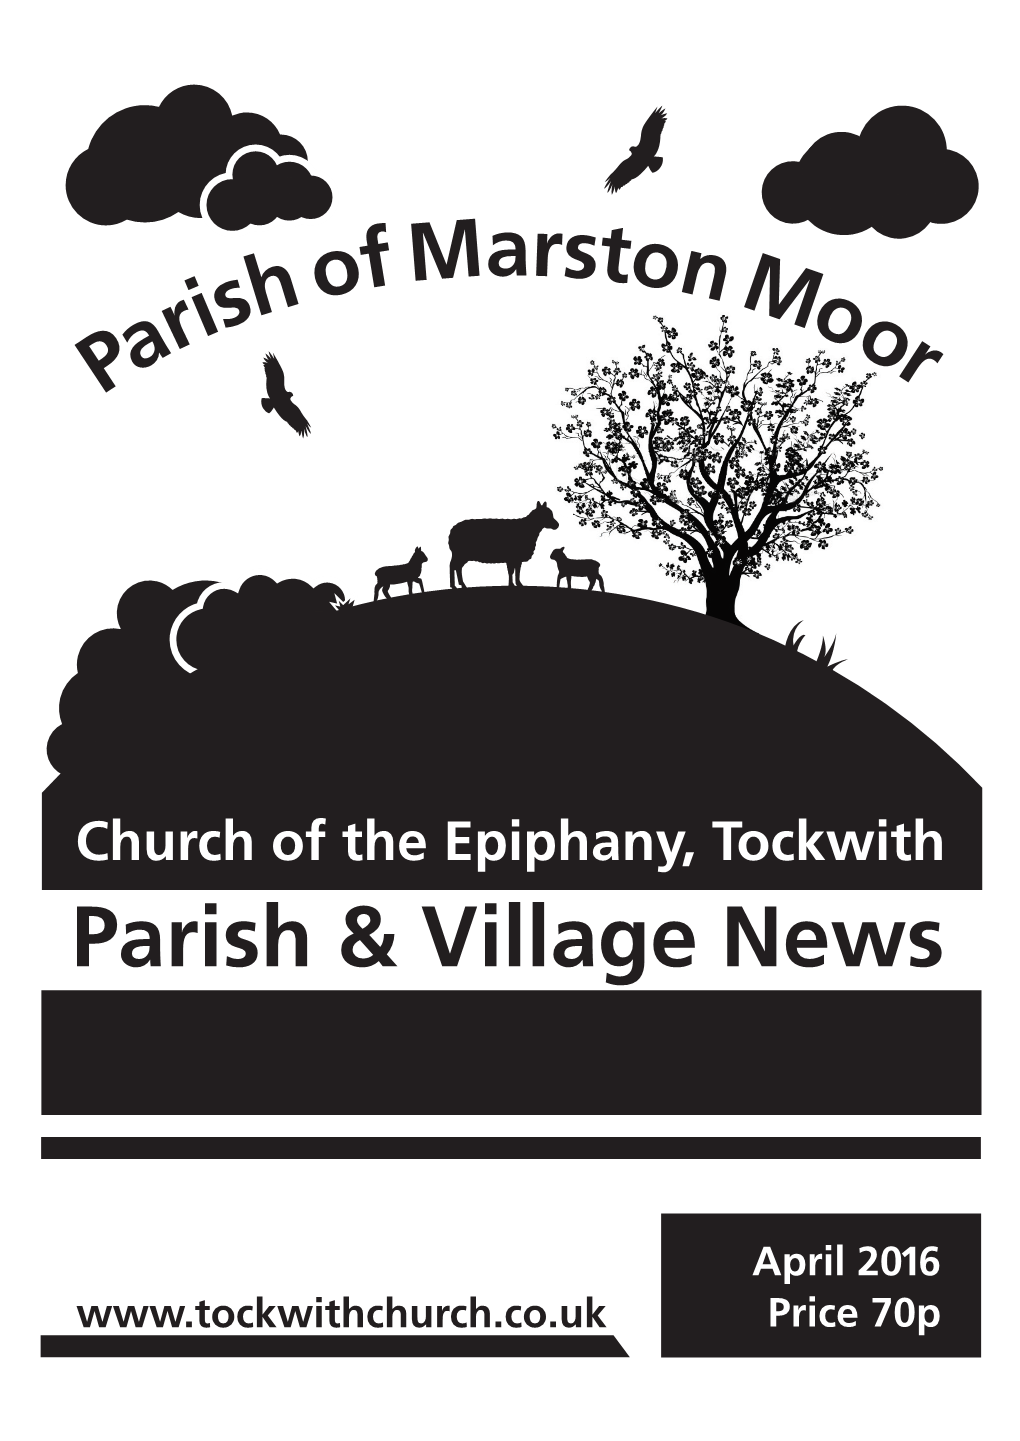 Church of the Epiphany, Tockwith Parish & Village News